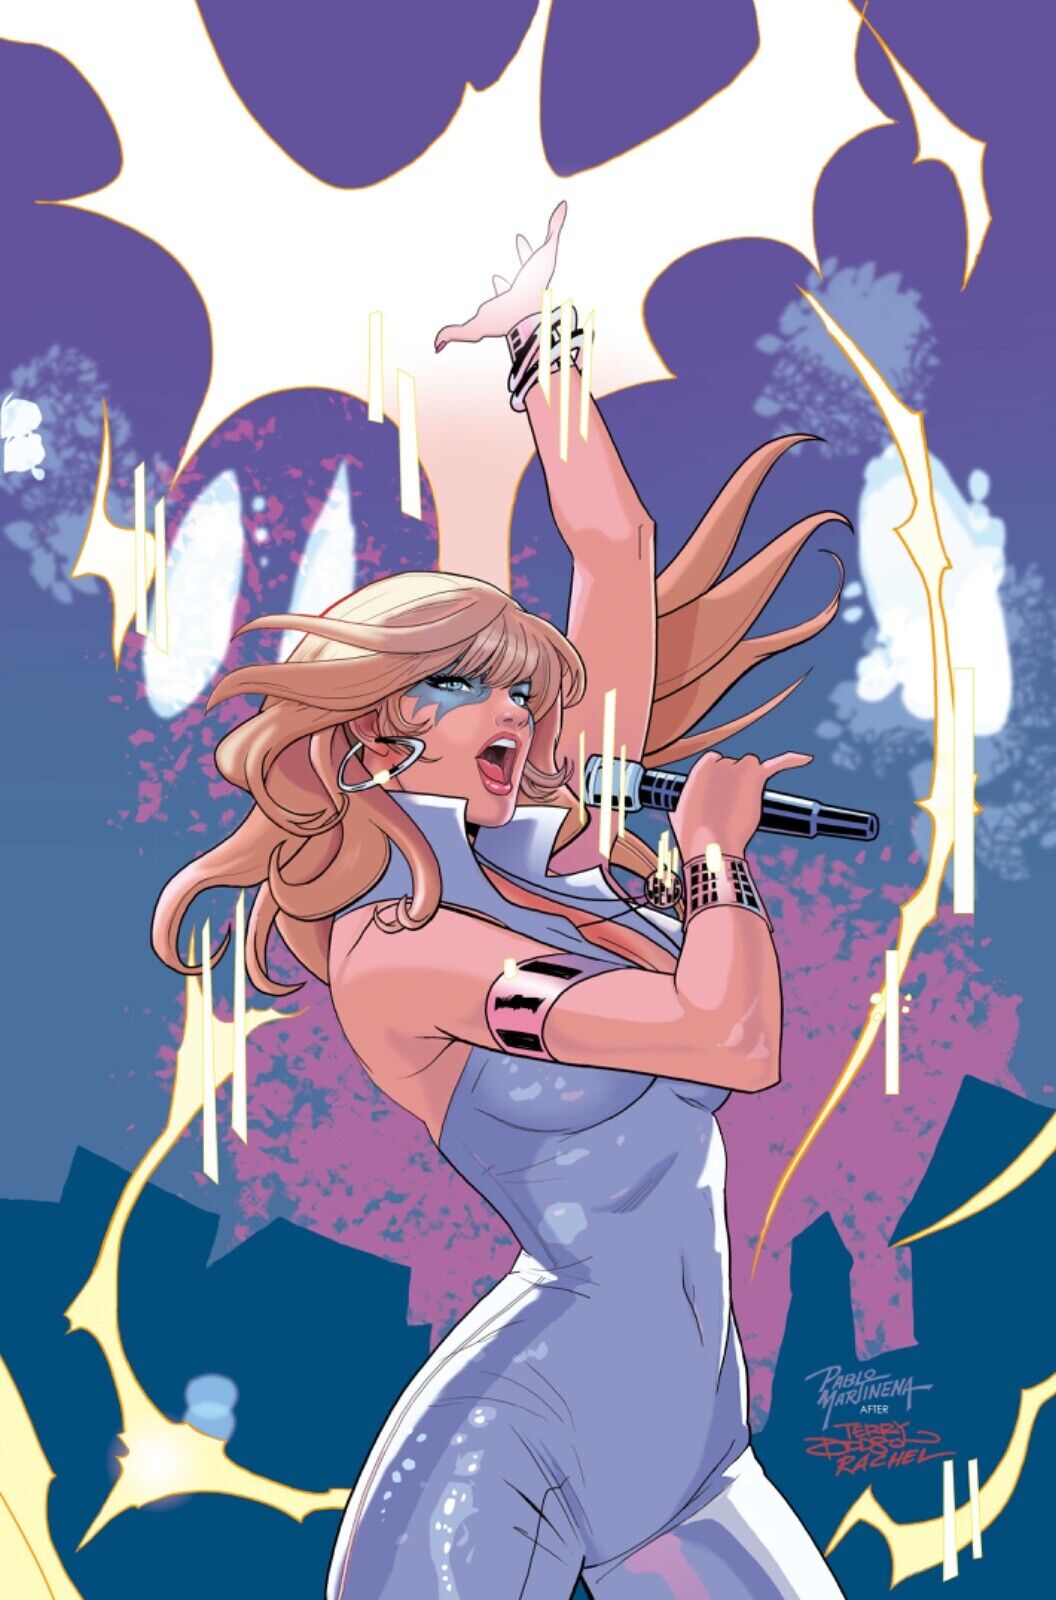 Female Force: Taylor Swift comic book bio SWIFTIES NEW DAZZLER edition NO LOGO